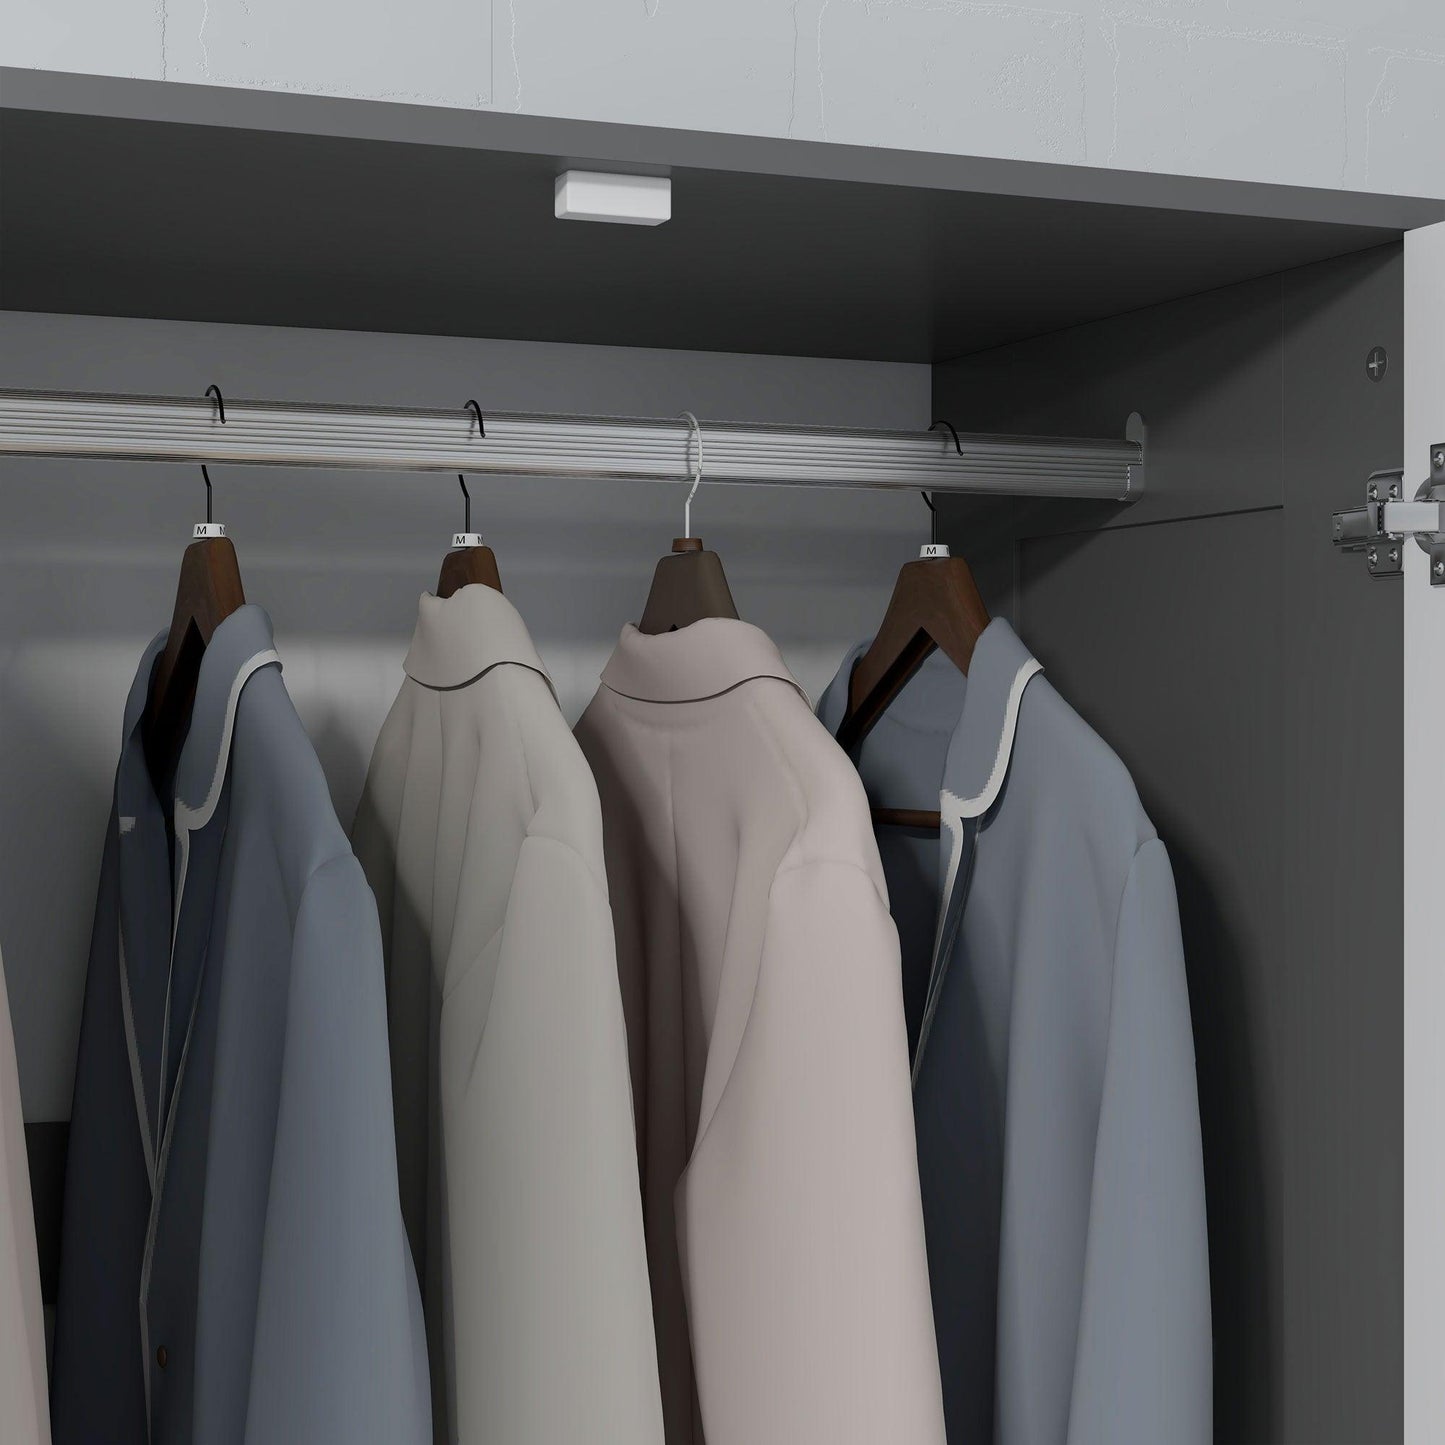 HOMCOM 2 Door Wardrobe, Modern Wardrobe with 3 Drawers and Hanging Rod for Bedroom, Grey - ALL4U RETAILER LTD